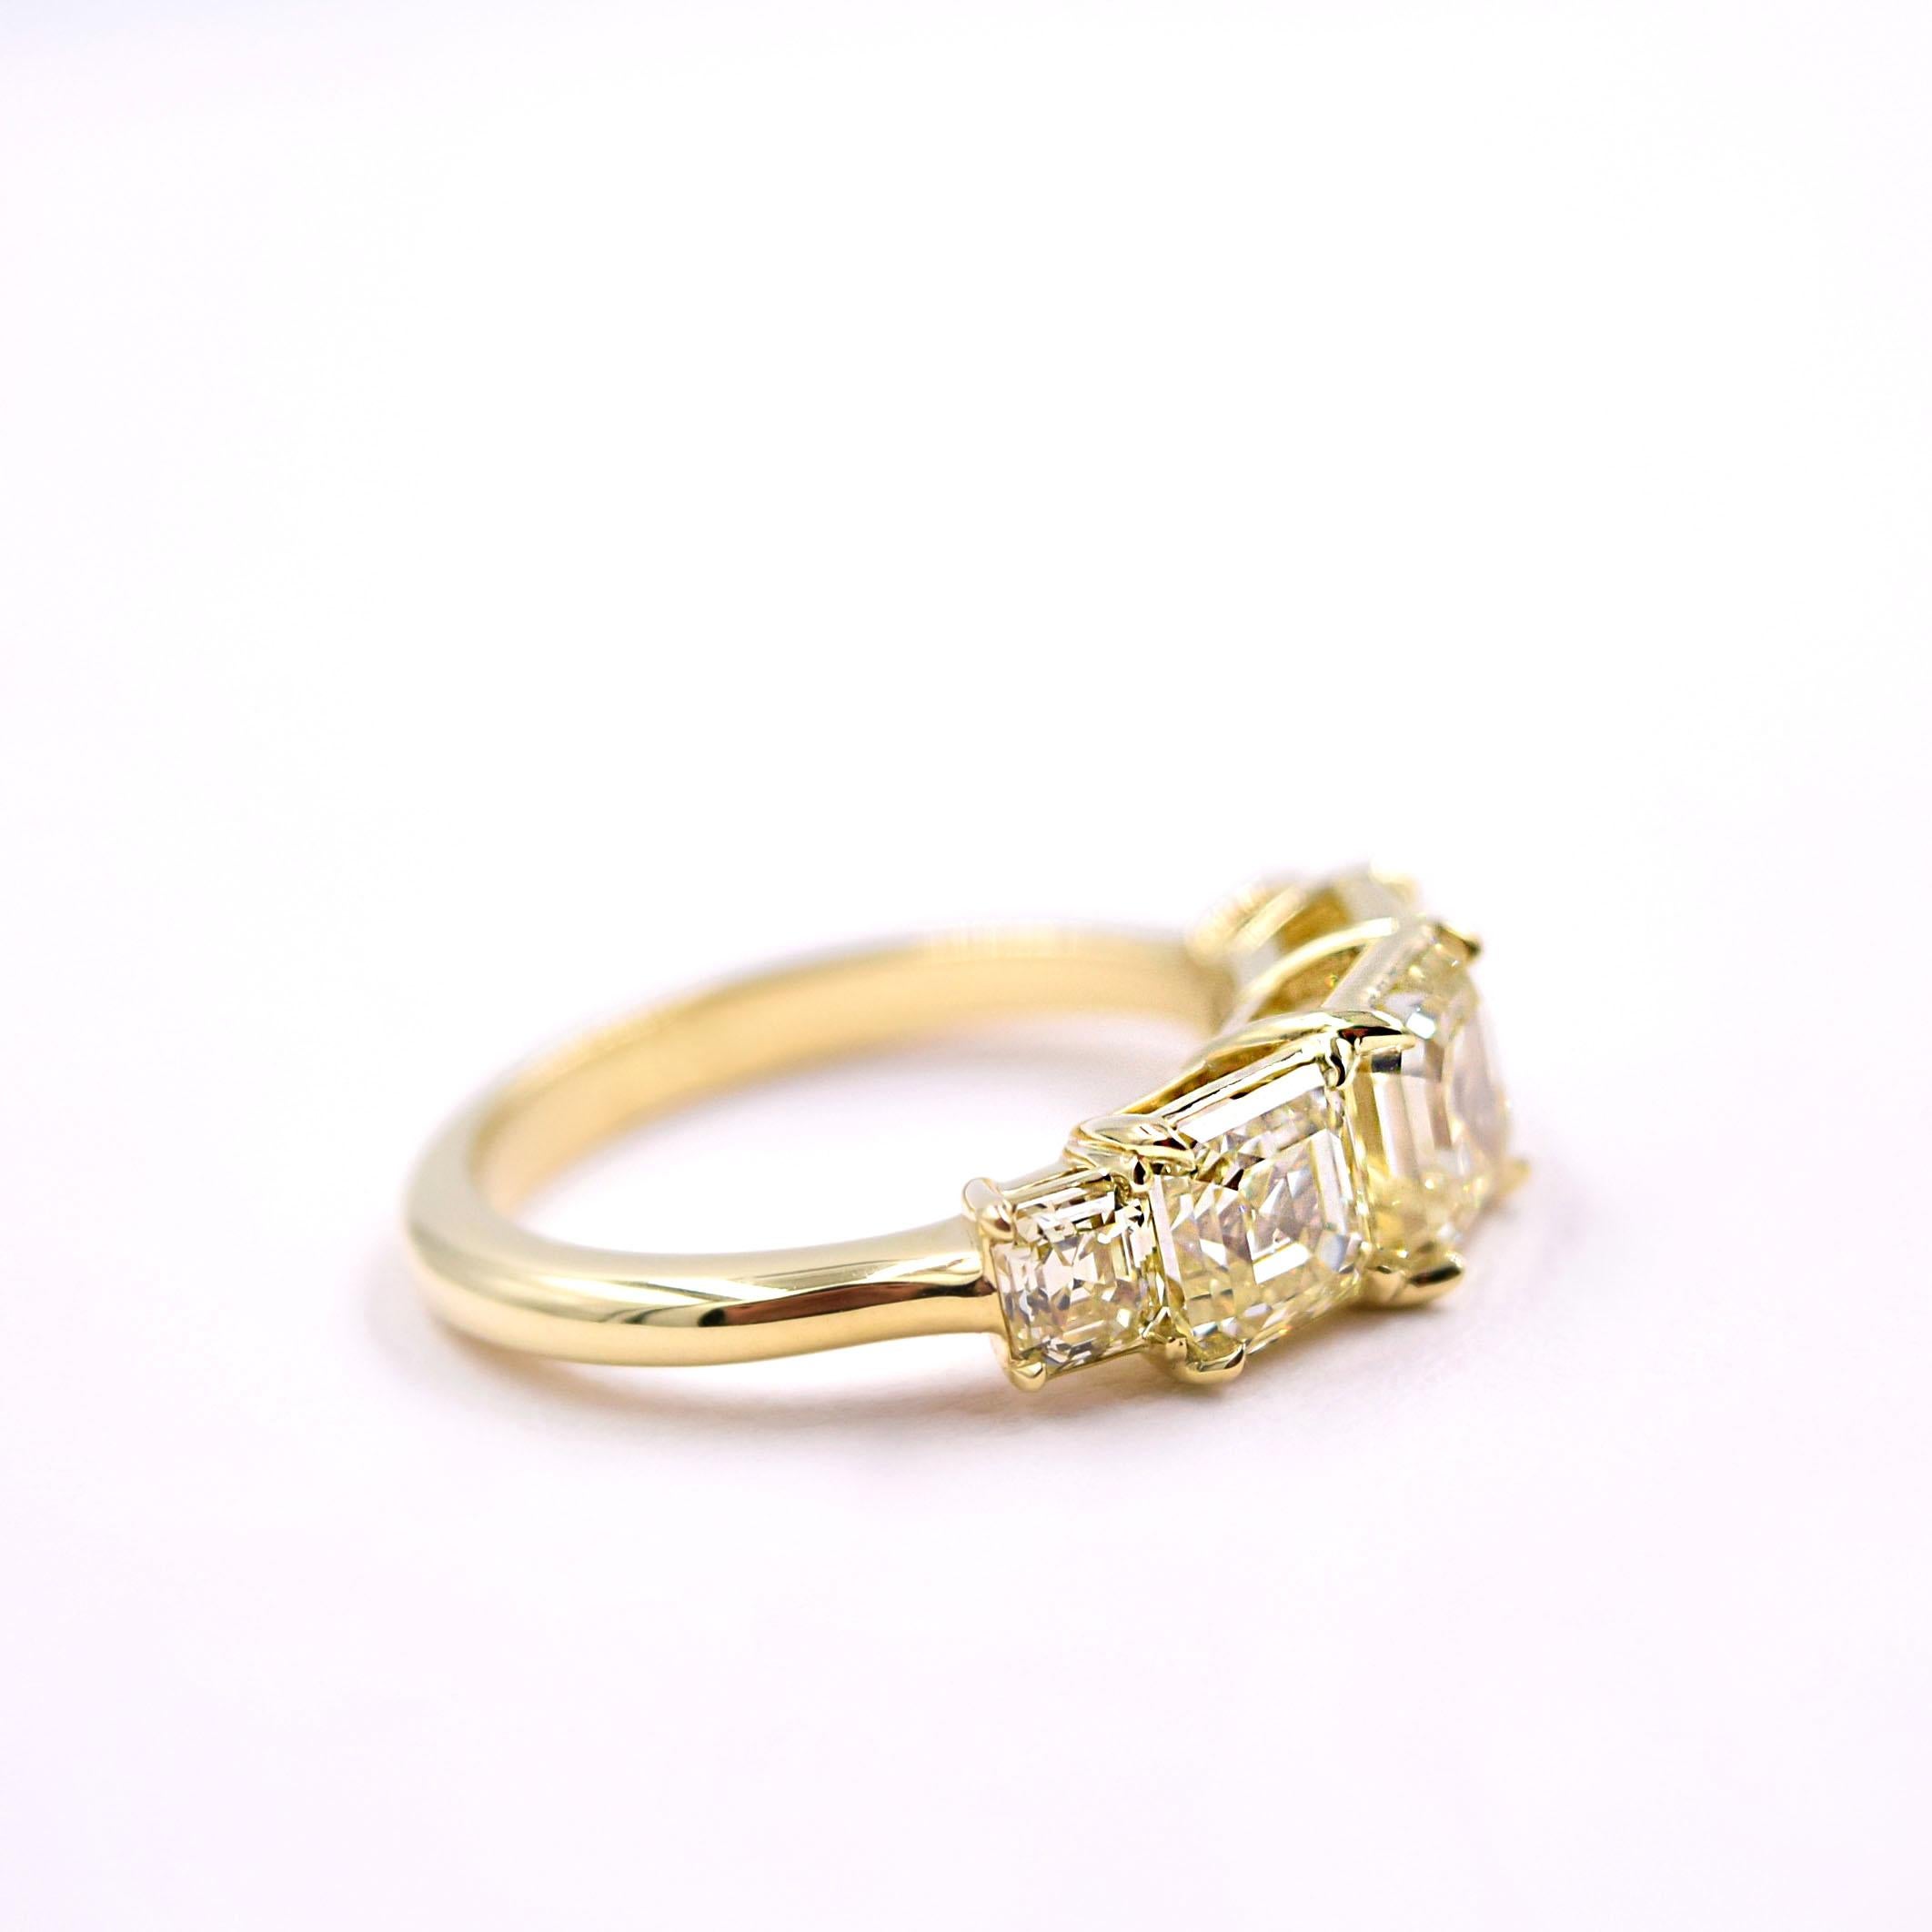 Princess Cut GIA Certified 3.54 Carat Asscher Cut Yellow Diamond Band in 18 Karat Yellow Gold For Sale